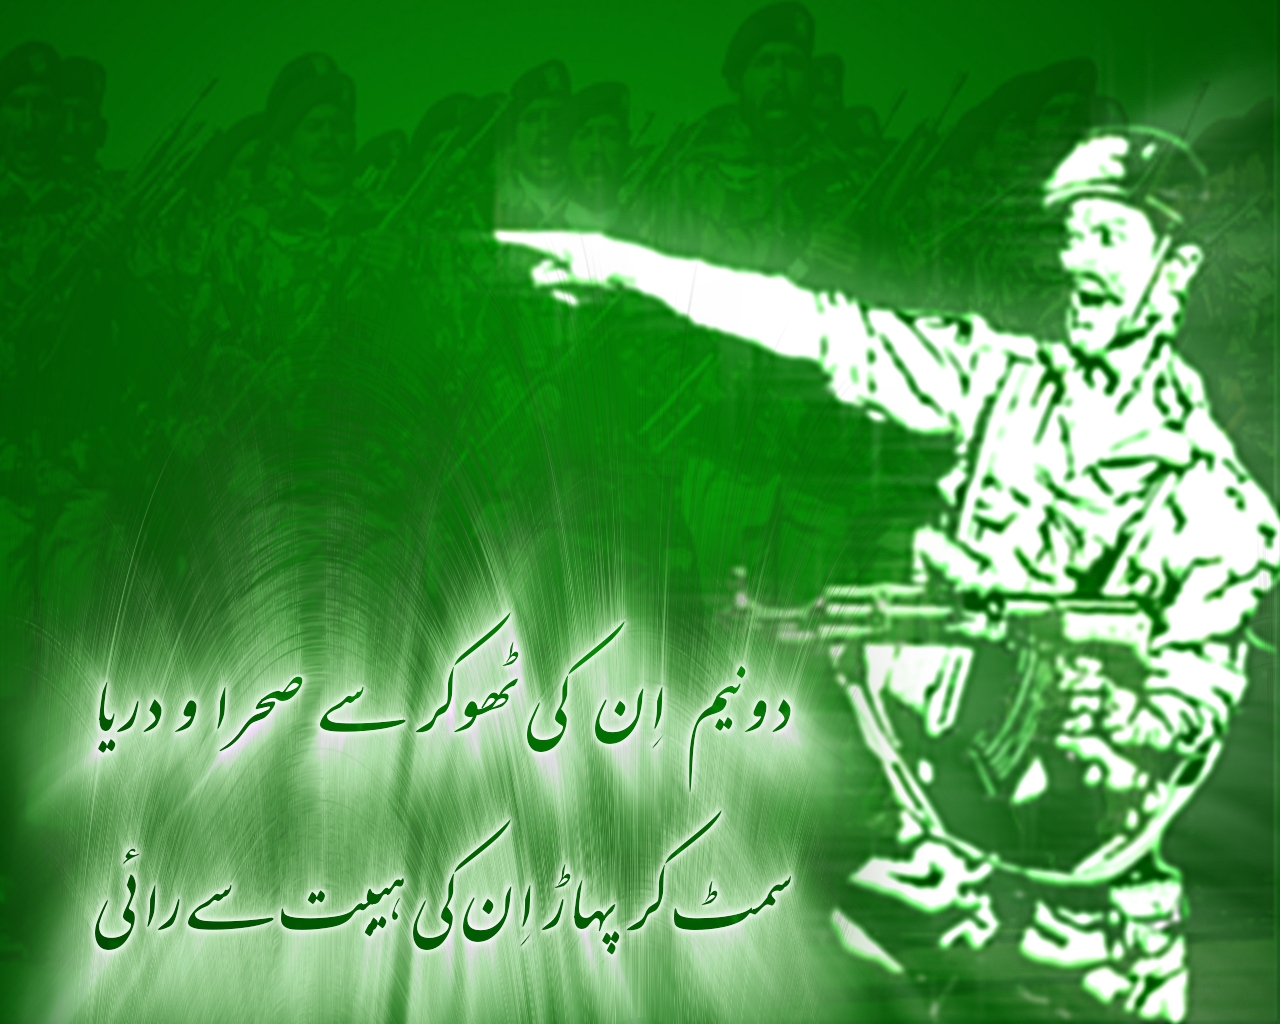 http://3.bp.blogspot.com/-in3w3UbGz3I/UA8rTeuECzI/AAAAAAAABr8/ZmowwUVMscU/s1600/14++Pakistan+army.jpg